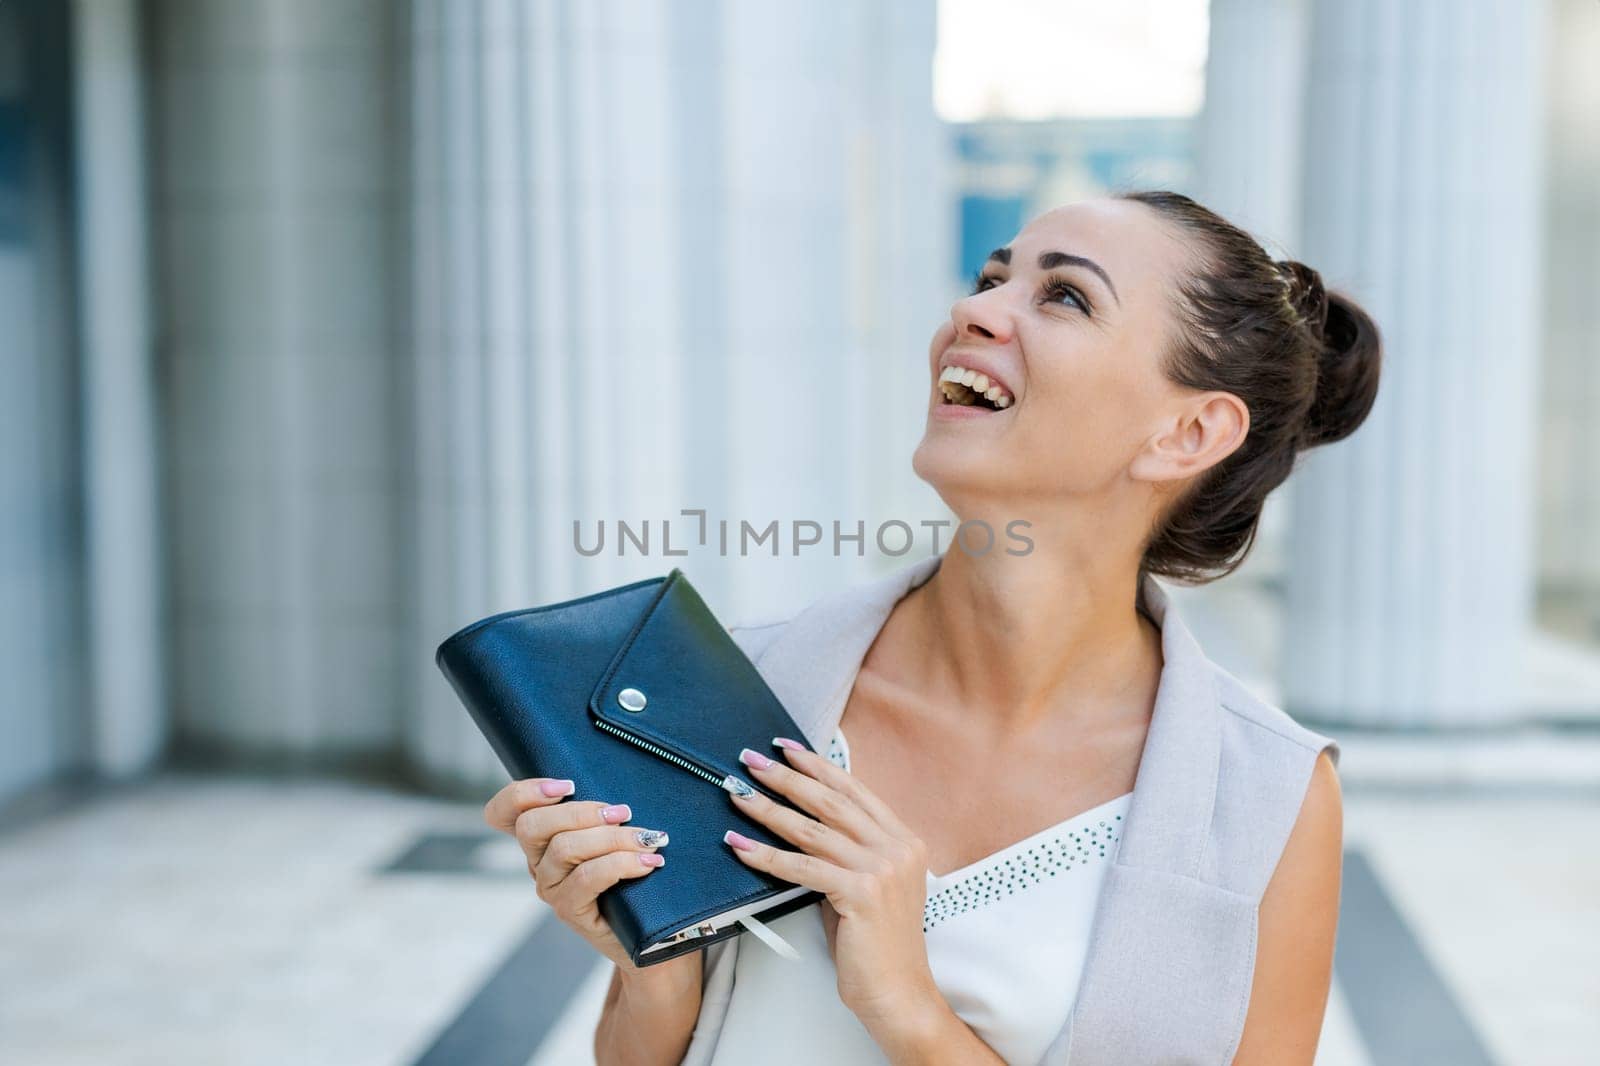 Successful businessman or entrepreneur smiling holding notepad while walking by EkaterinaPereslavtseva